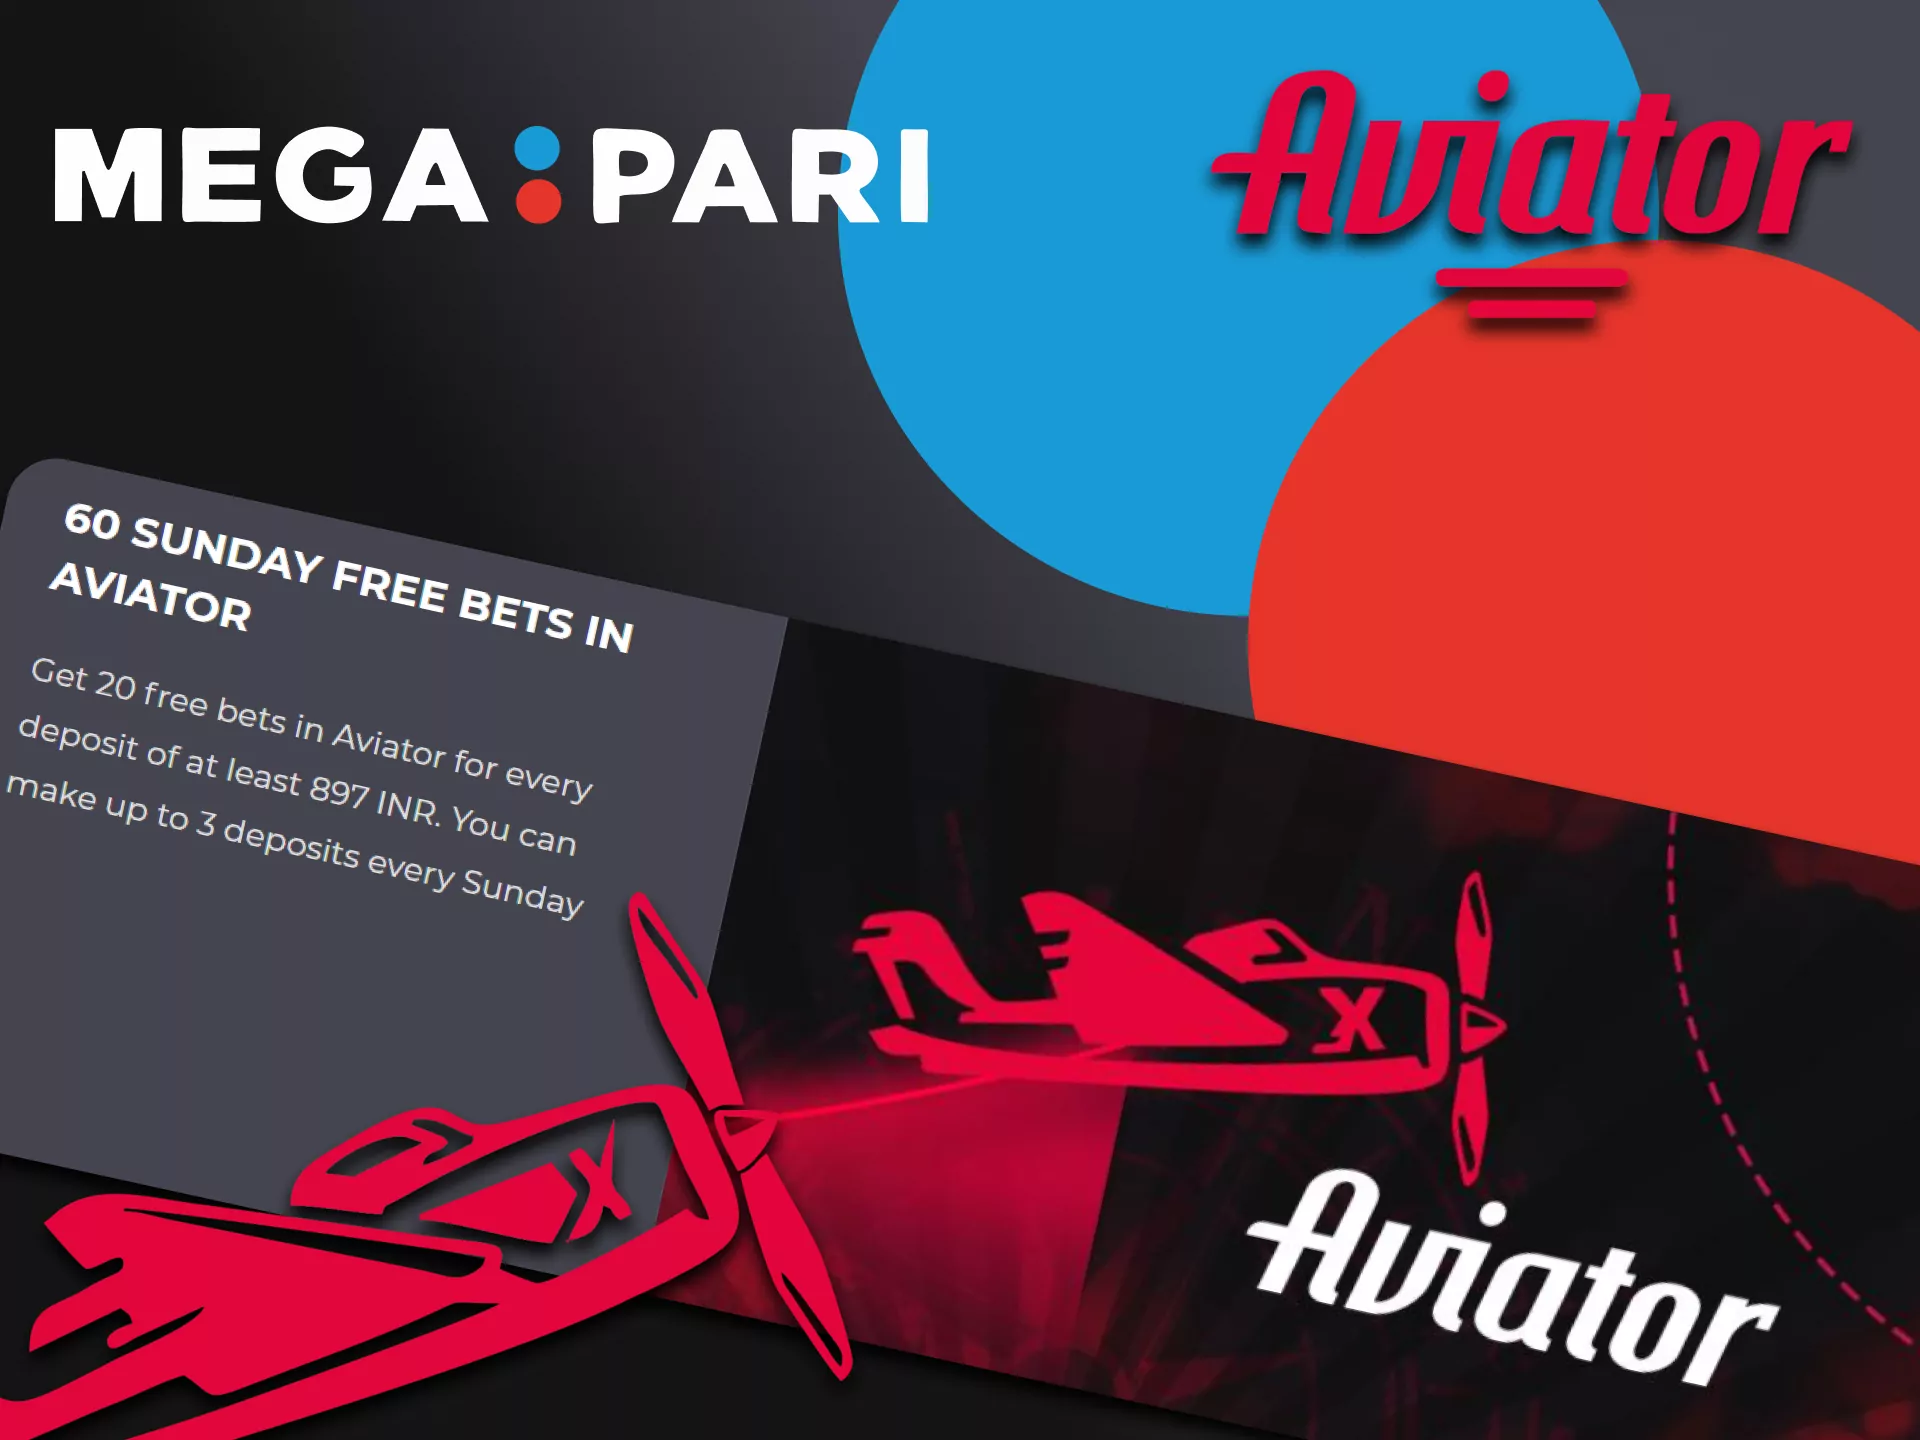 Get a bonus for playing Aviator from Megapari.